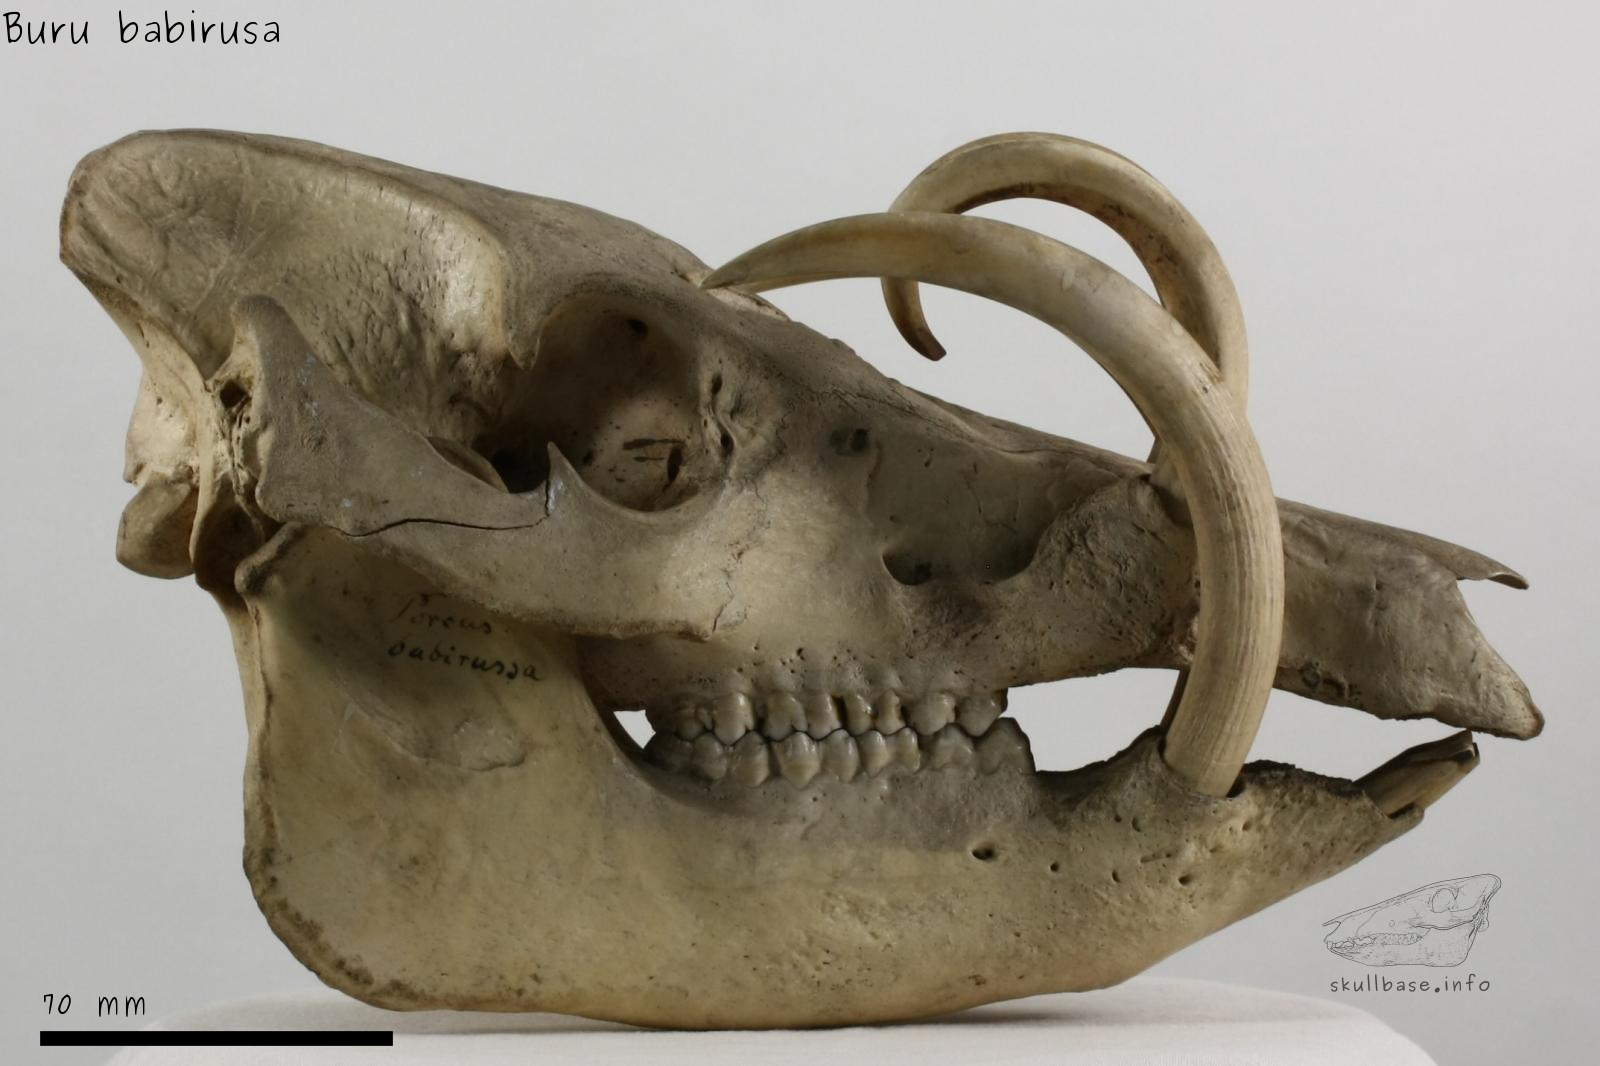 Buru babirusa (Babyrousa babyrussa) skull lateral view